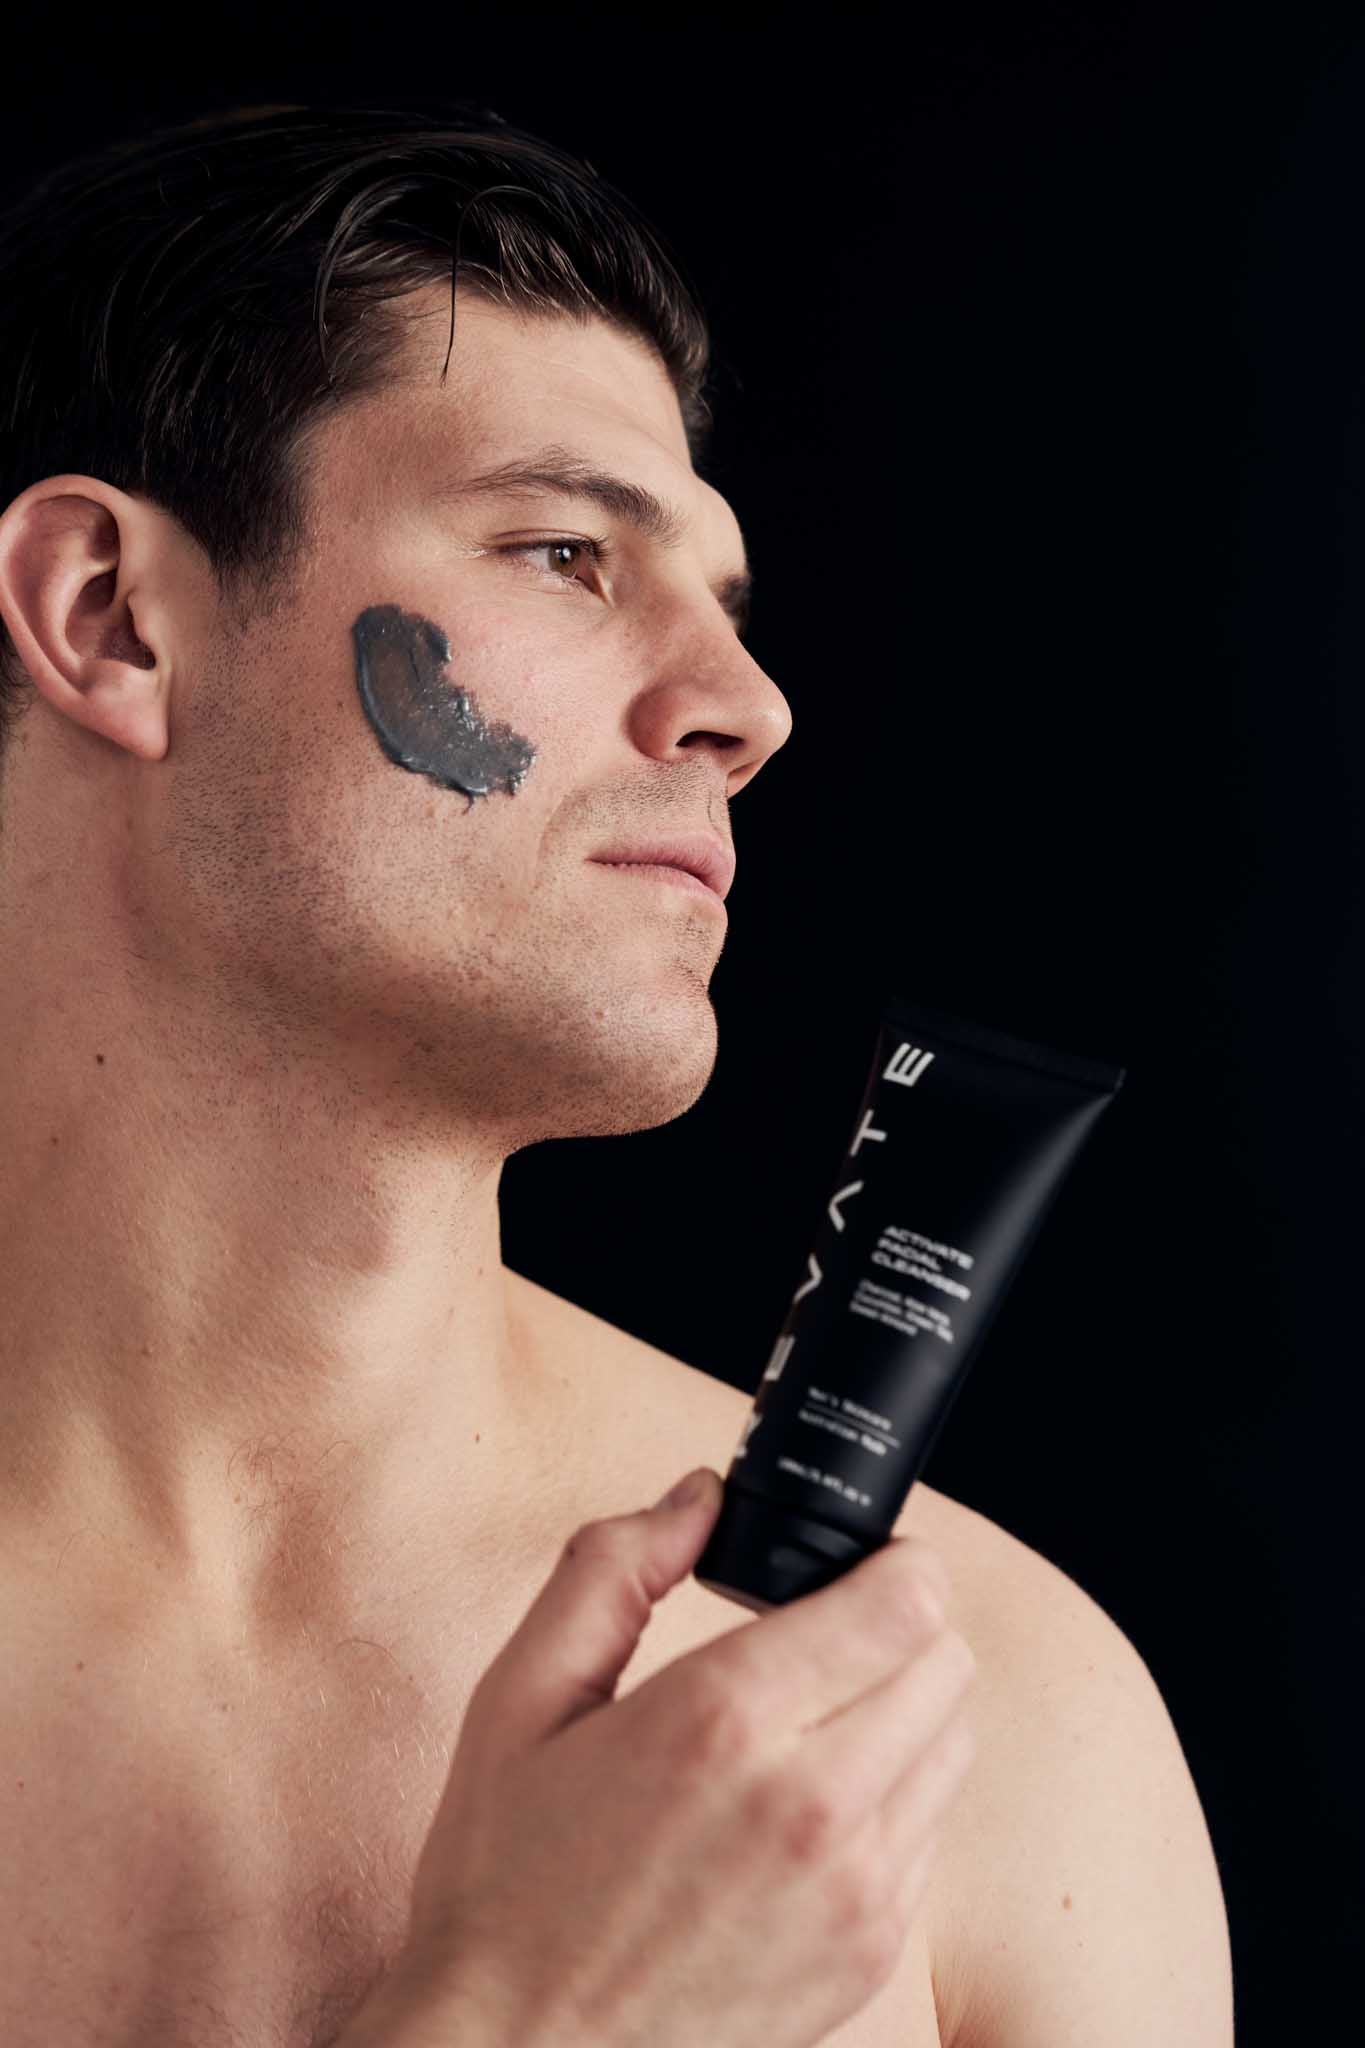 Revate Facial Cleanser for men